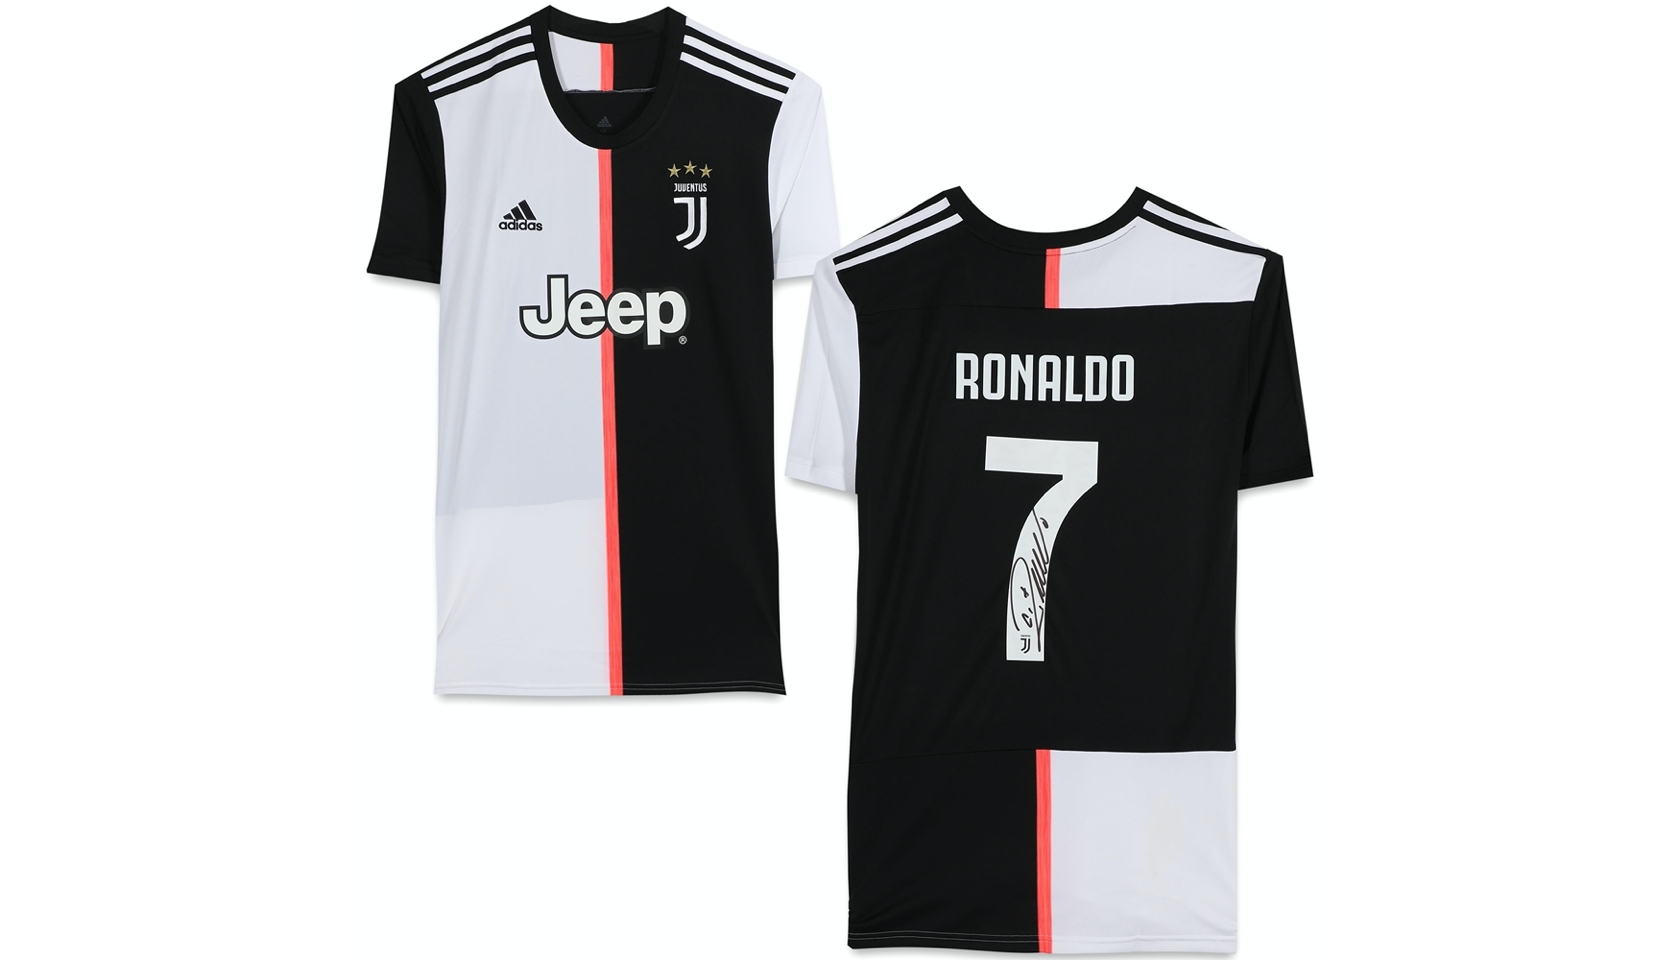 ronaldo jersey black and white